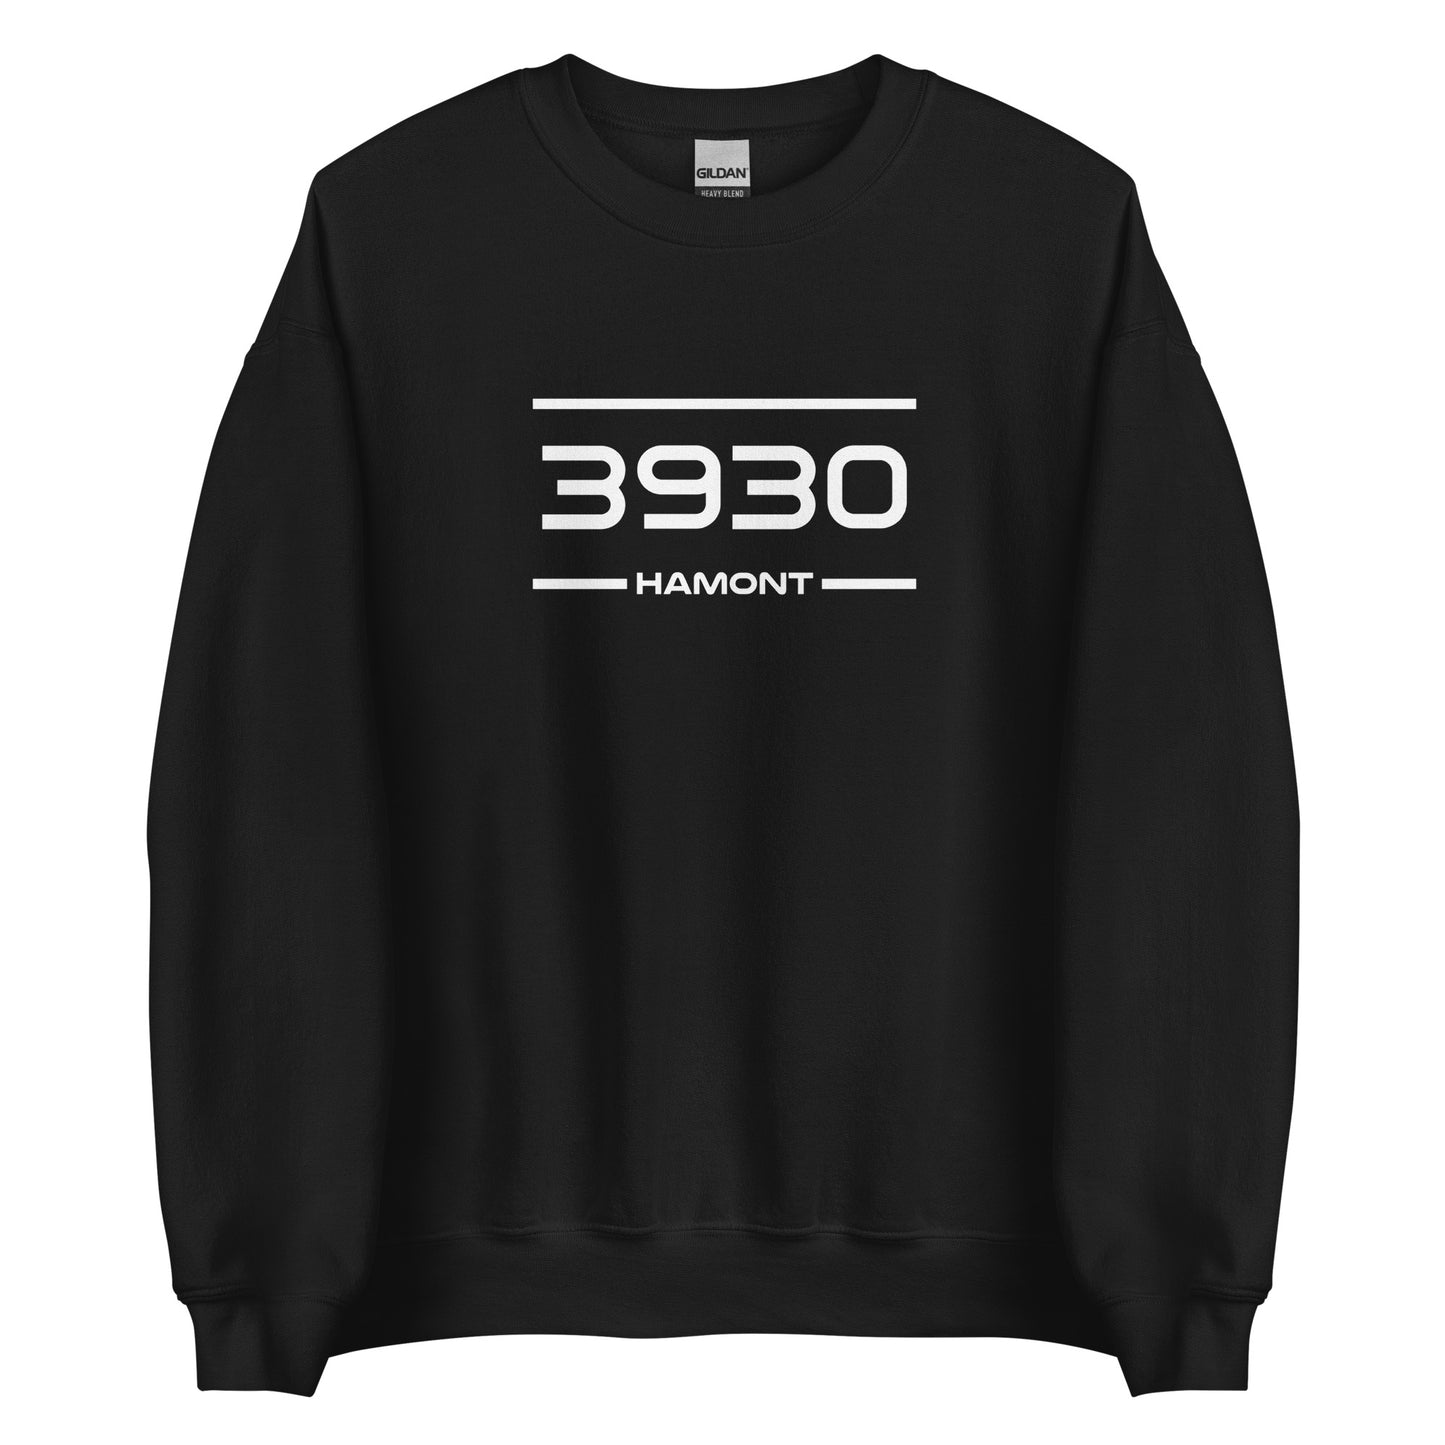 Sweater - 3930 - Hamont (M/V)